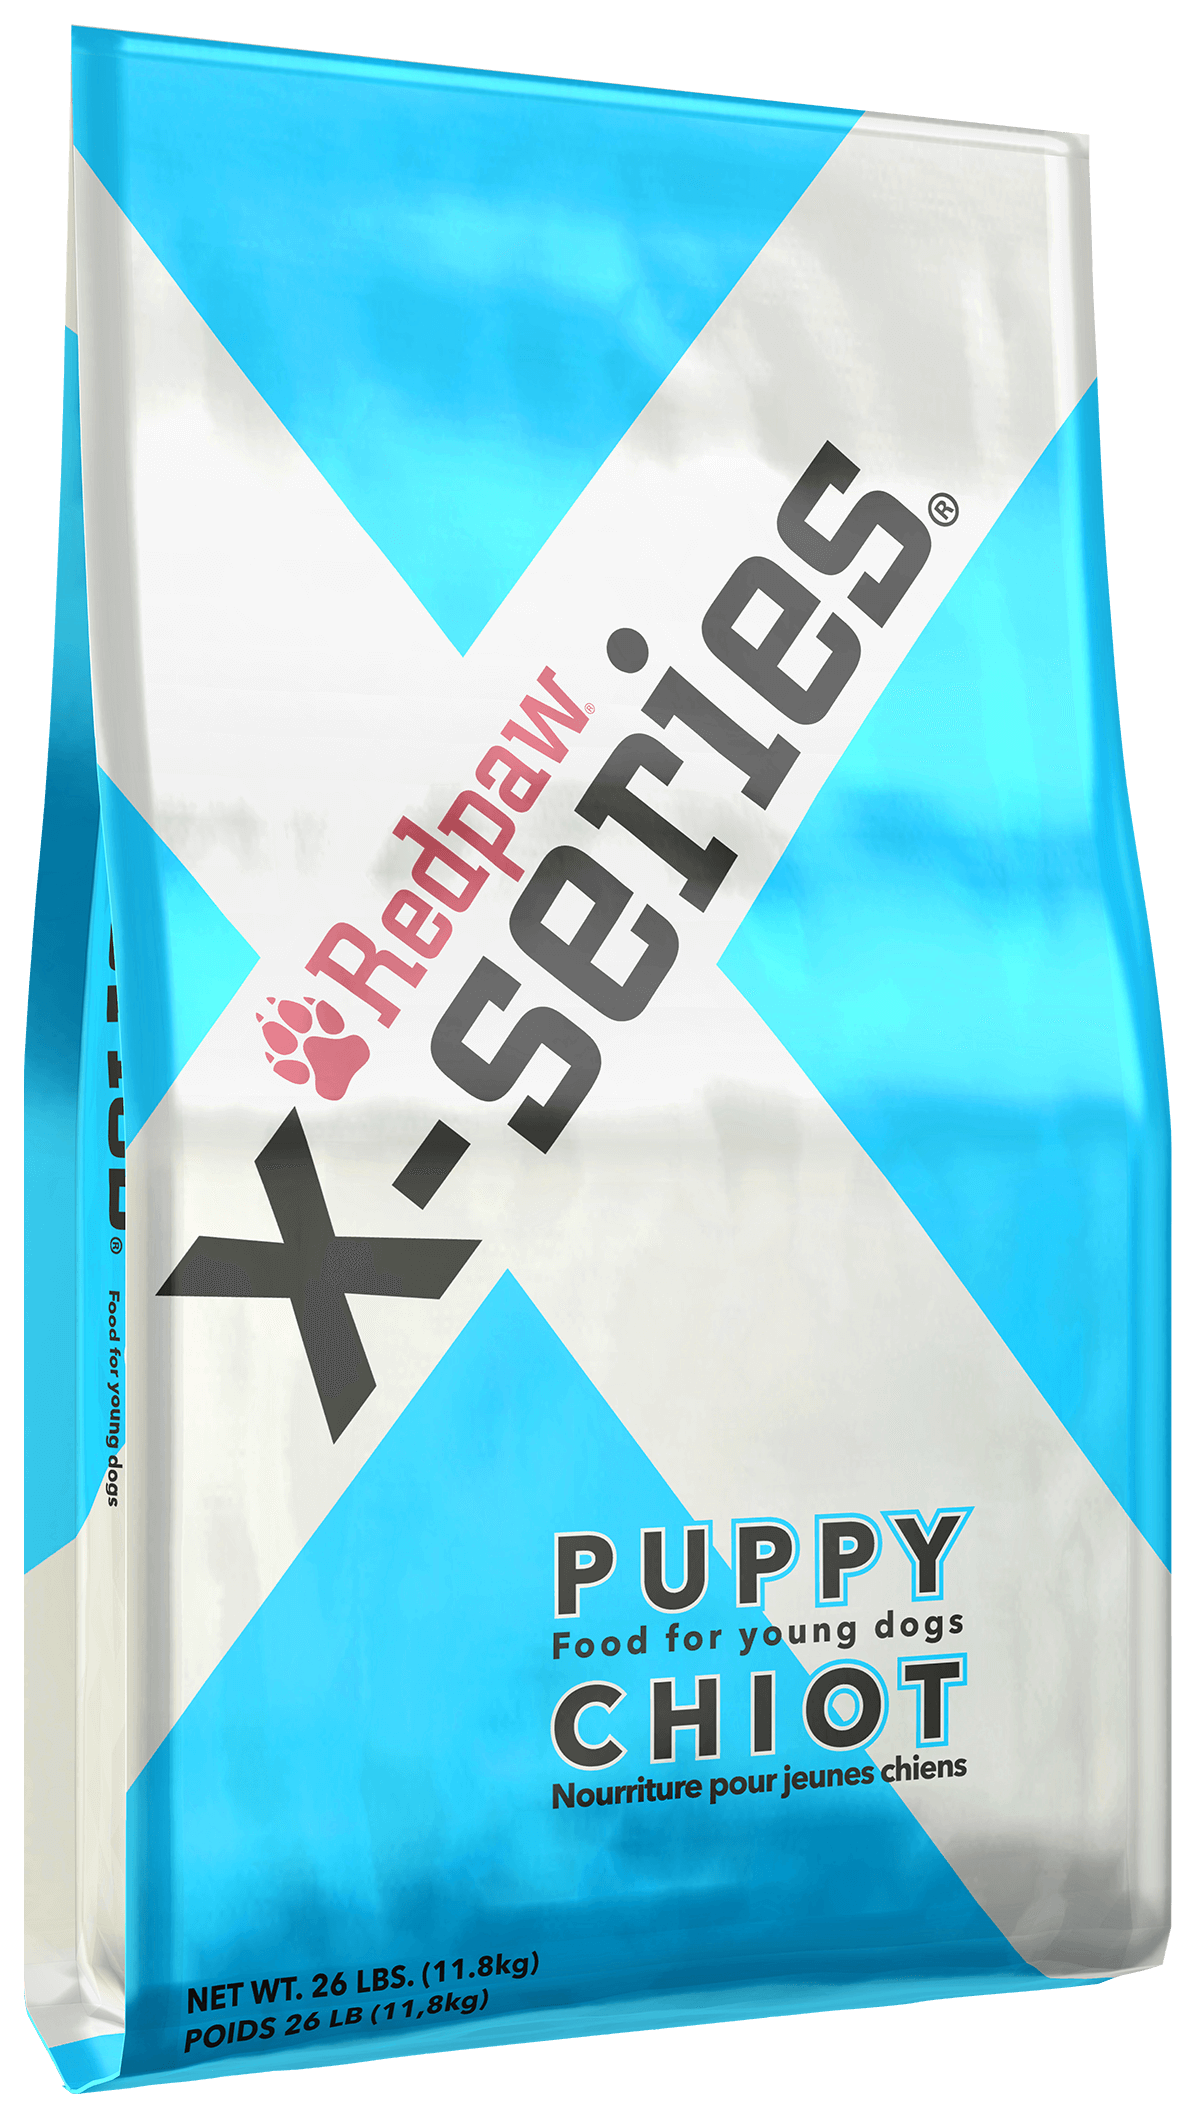 Redpaw X Series Dog Food Puppy 26lb bag side